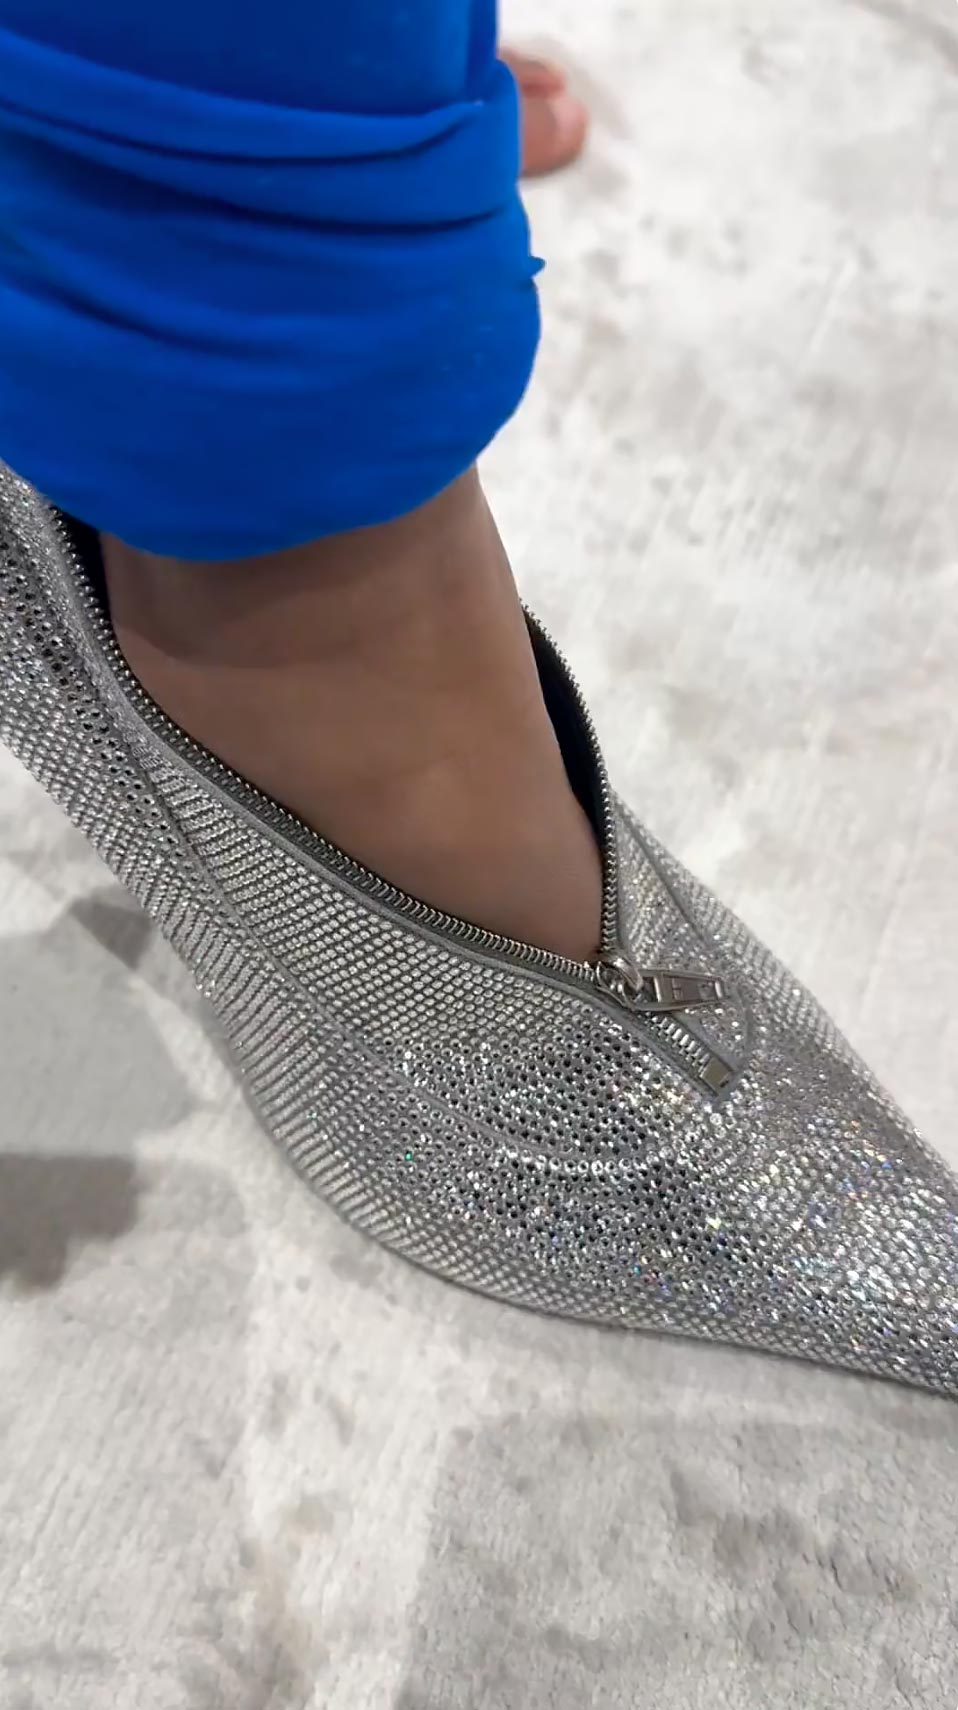 Chicago West Attempts to Wear Kim Kardashian’s Balenciaga Shoe Purse as a Heel